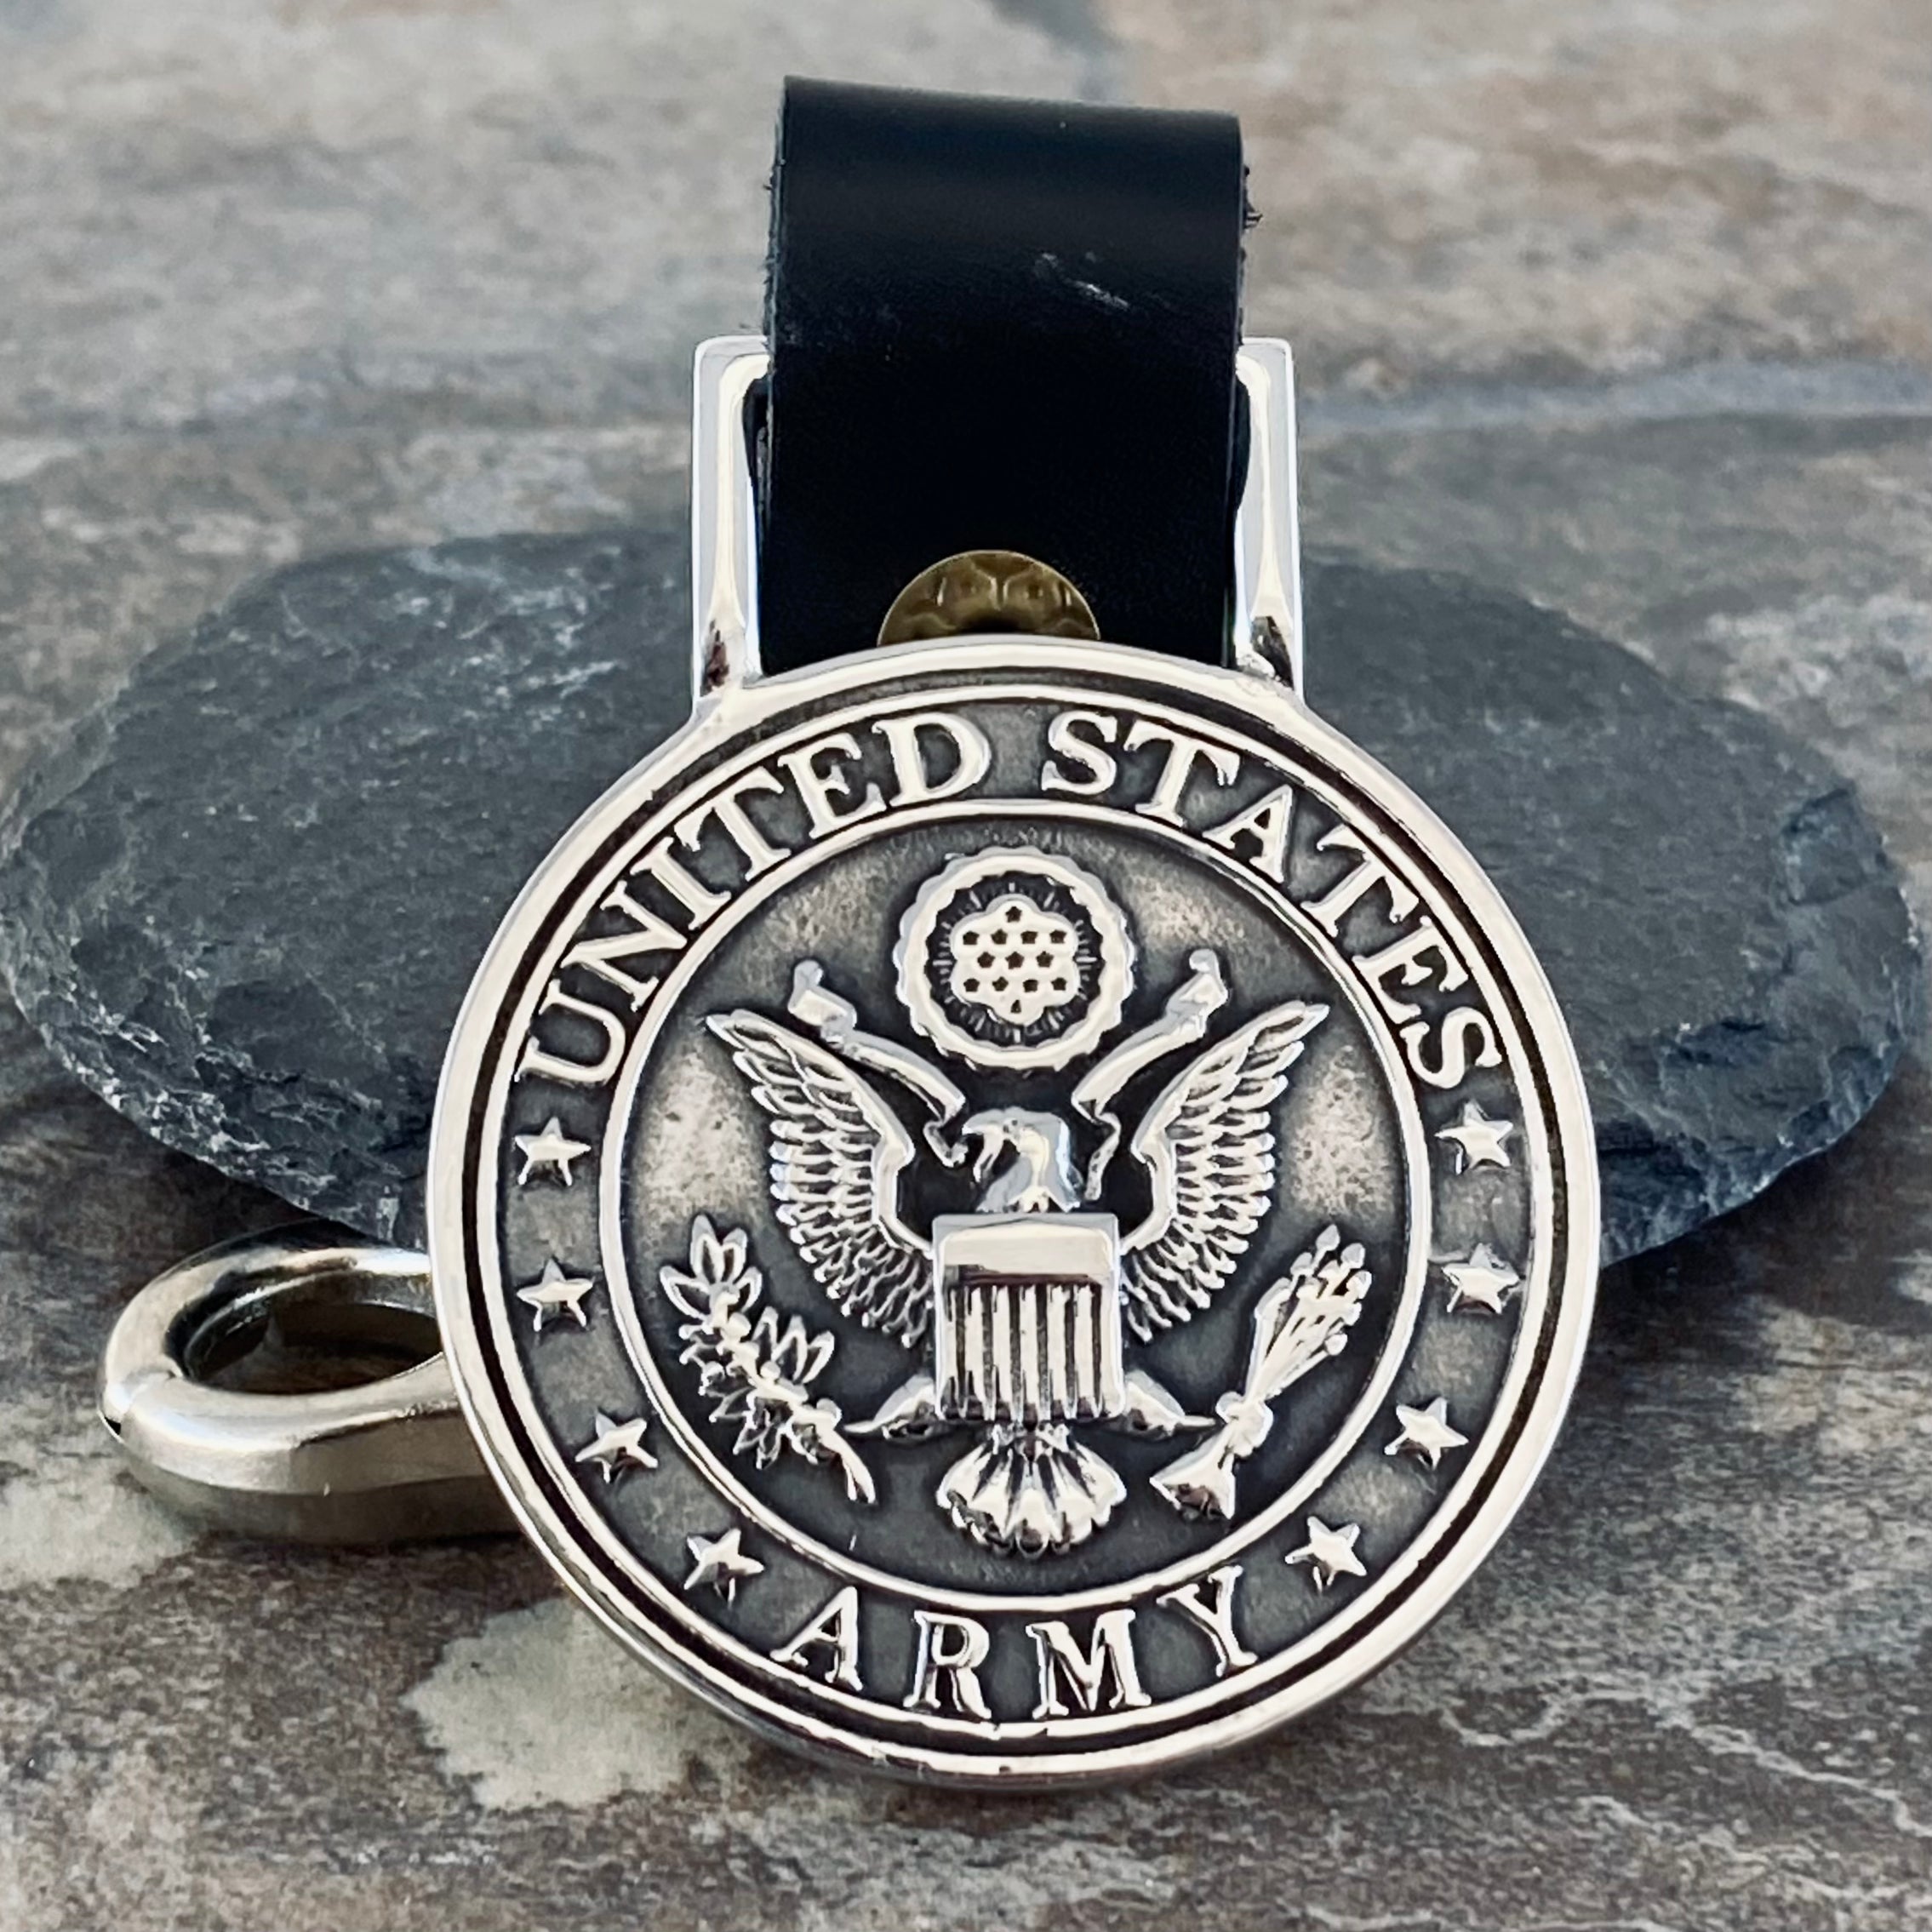 U.S. Army Strong Keychain Key Ring Military USA Medal Emblem